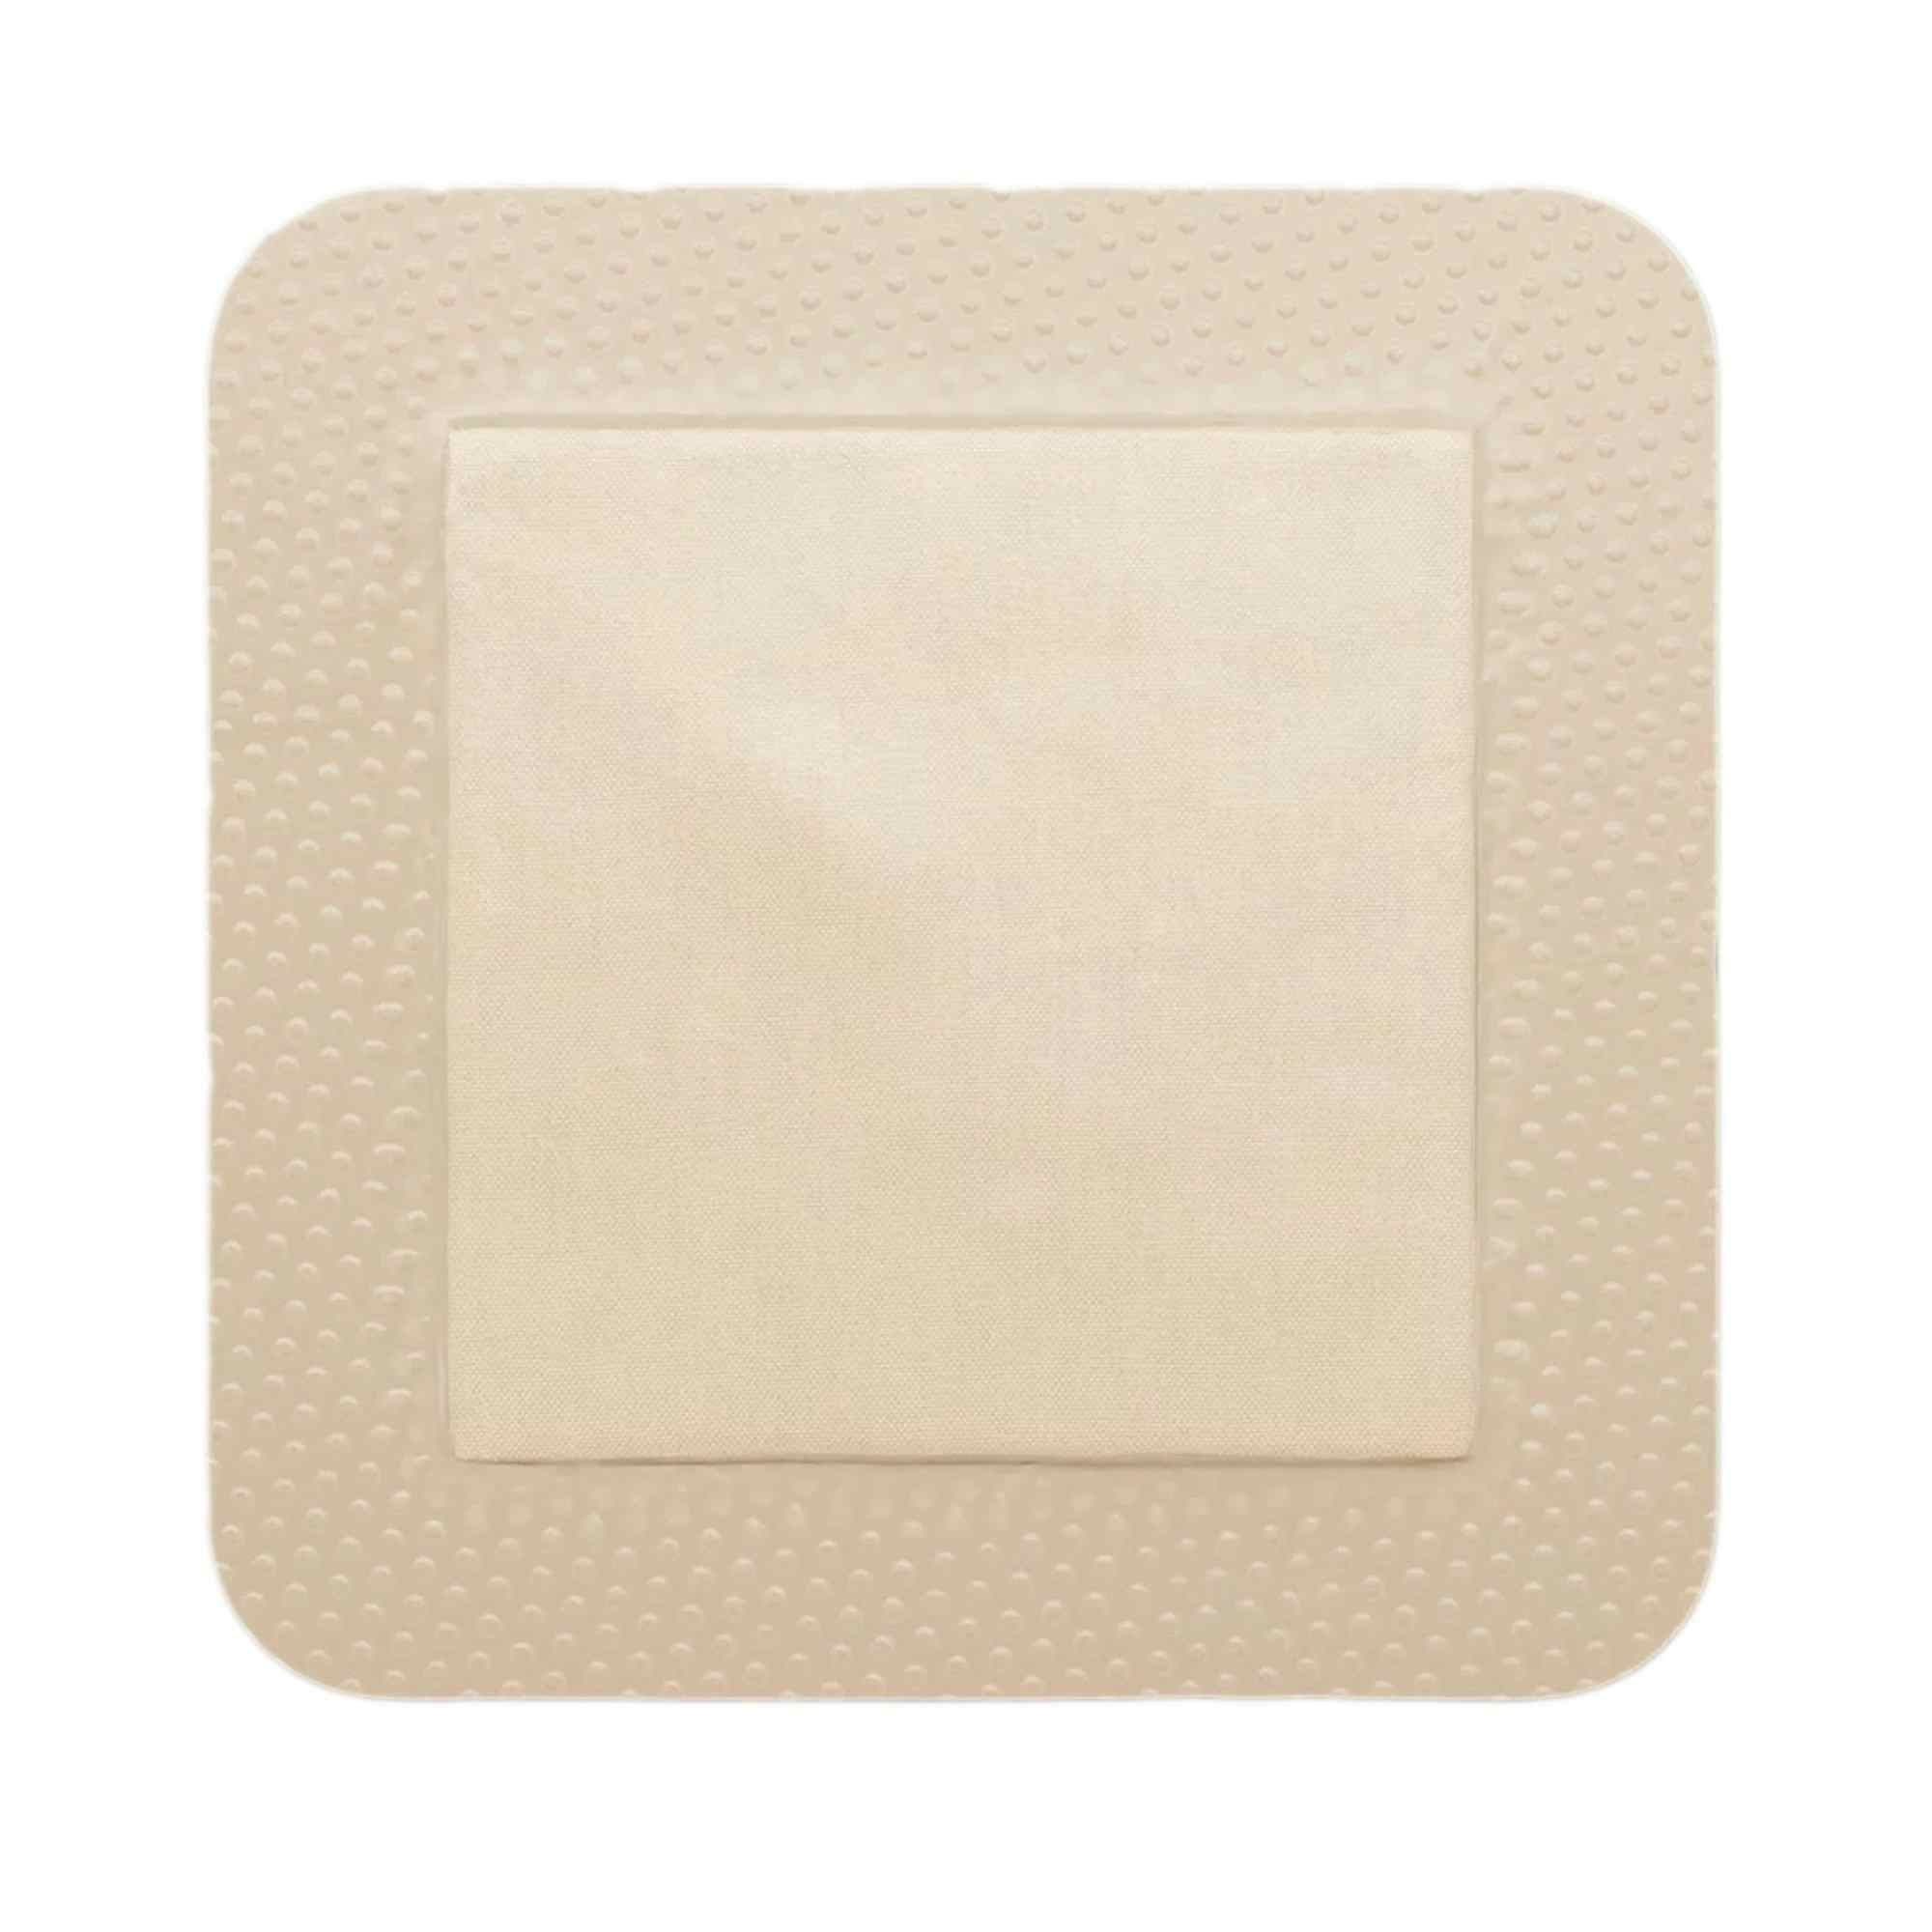 Molnlycke Mepilex Border Lite Silicone Adhesive with Border Thin Silicone Foam Dressing, 1-3/5 X 2", 281000, Box of 10